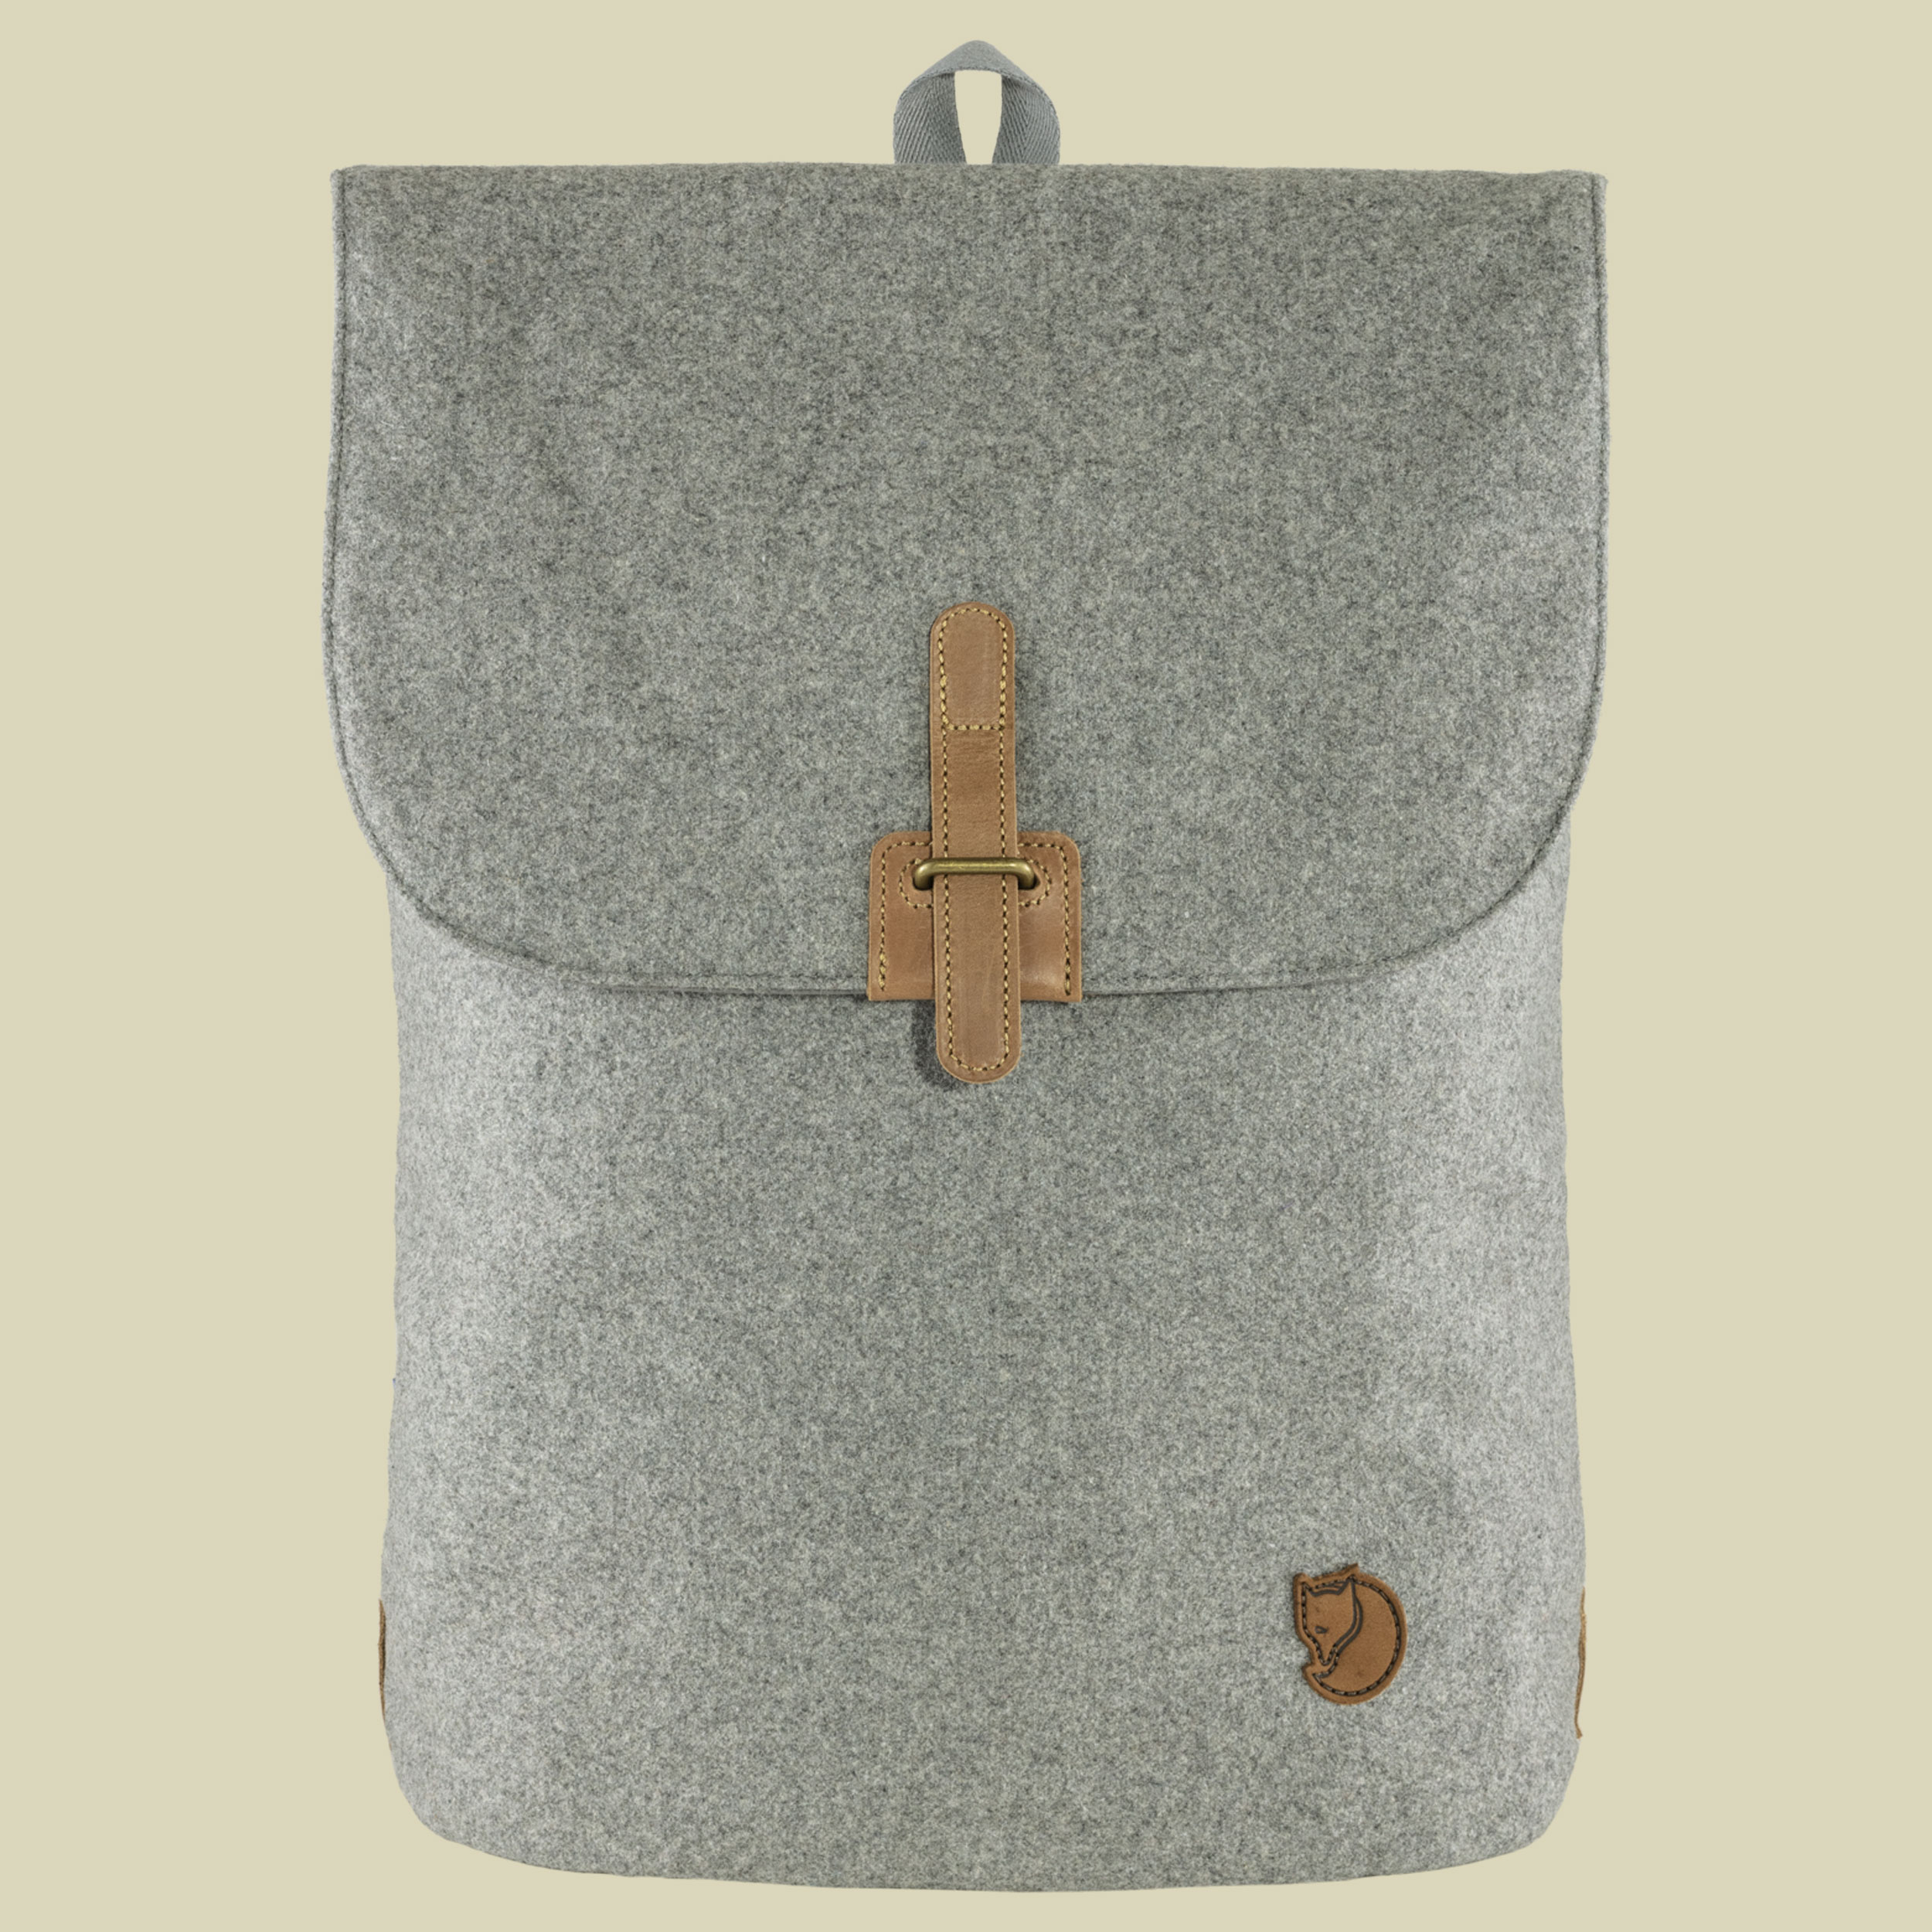 Norrvage Foldsack Volumen 16 Farbe granite grey